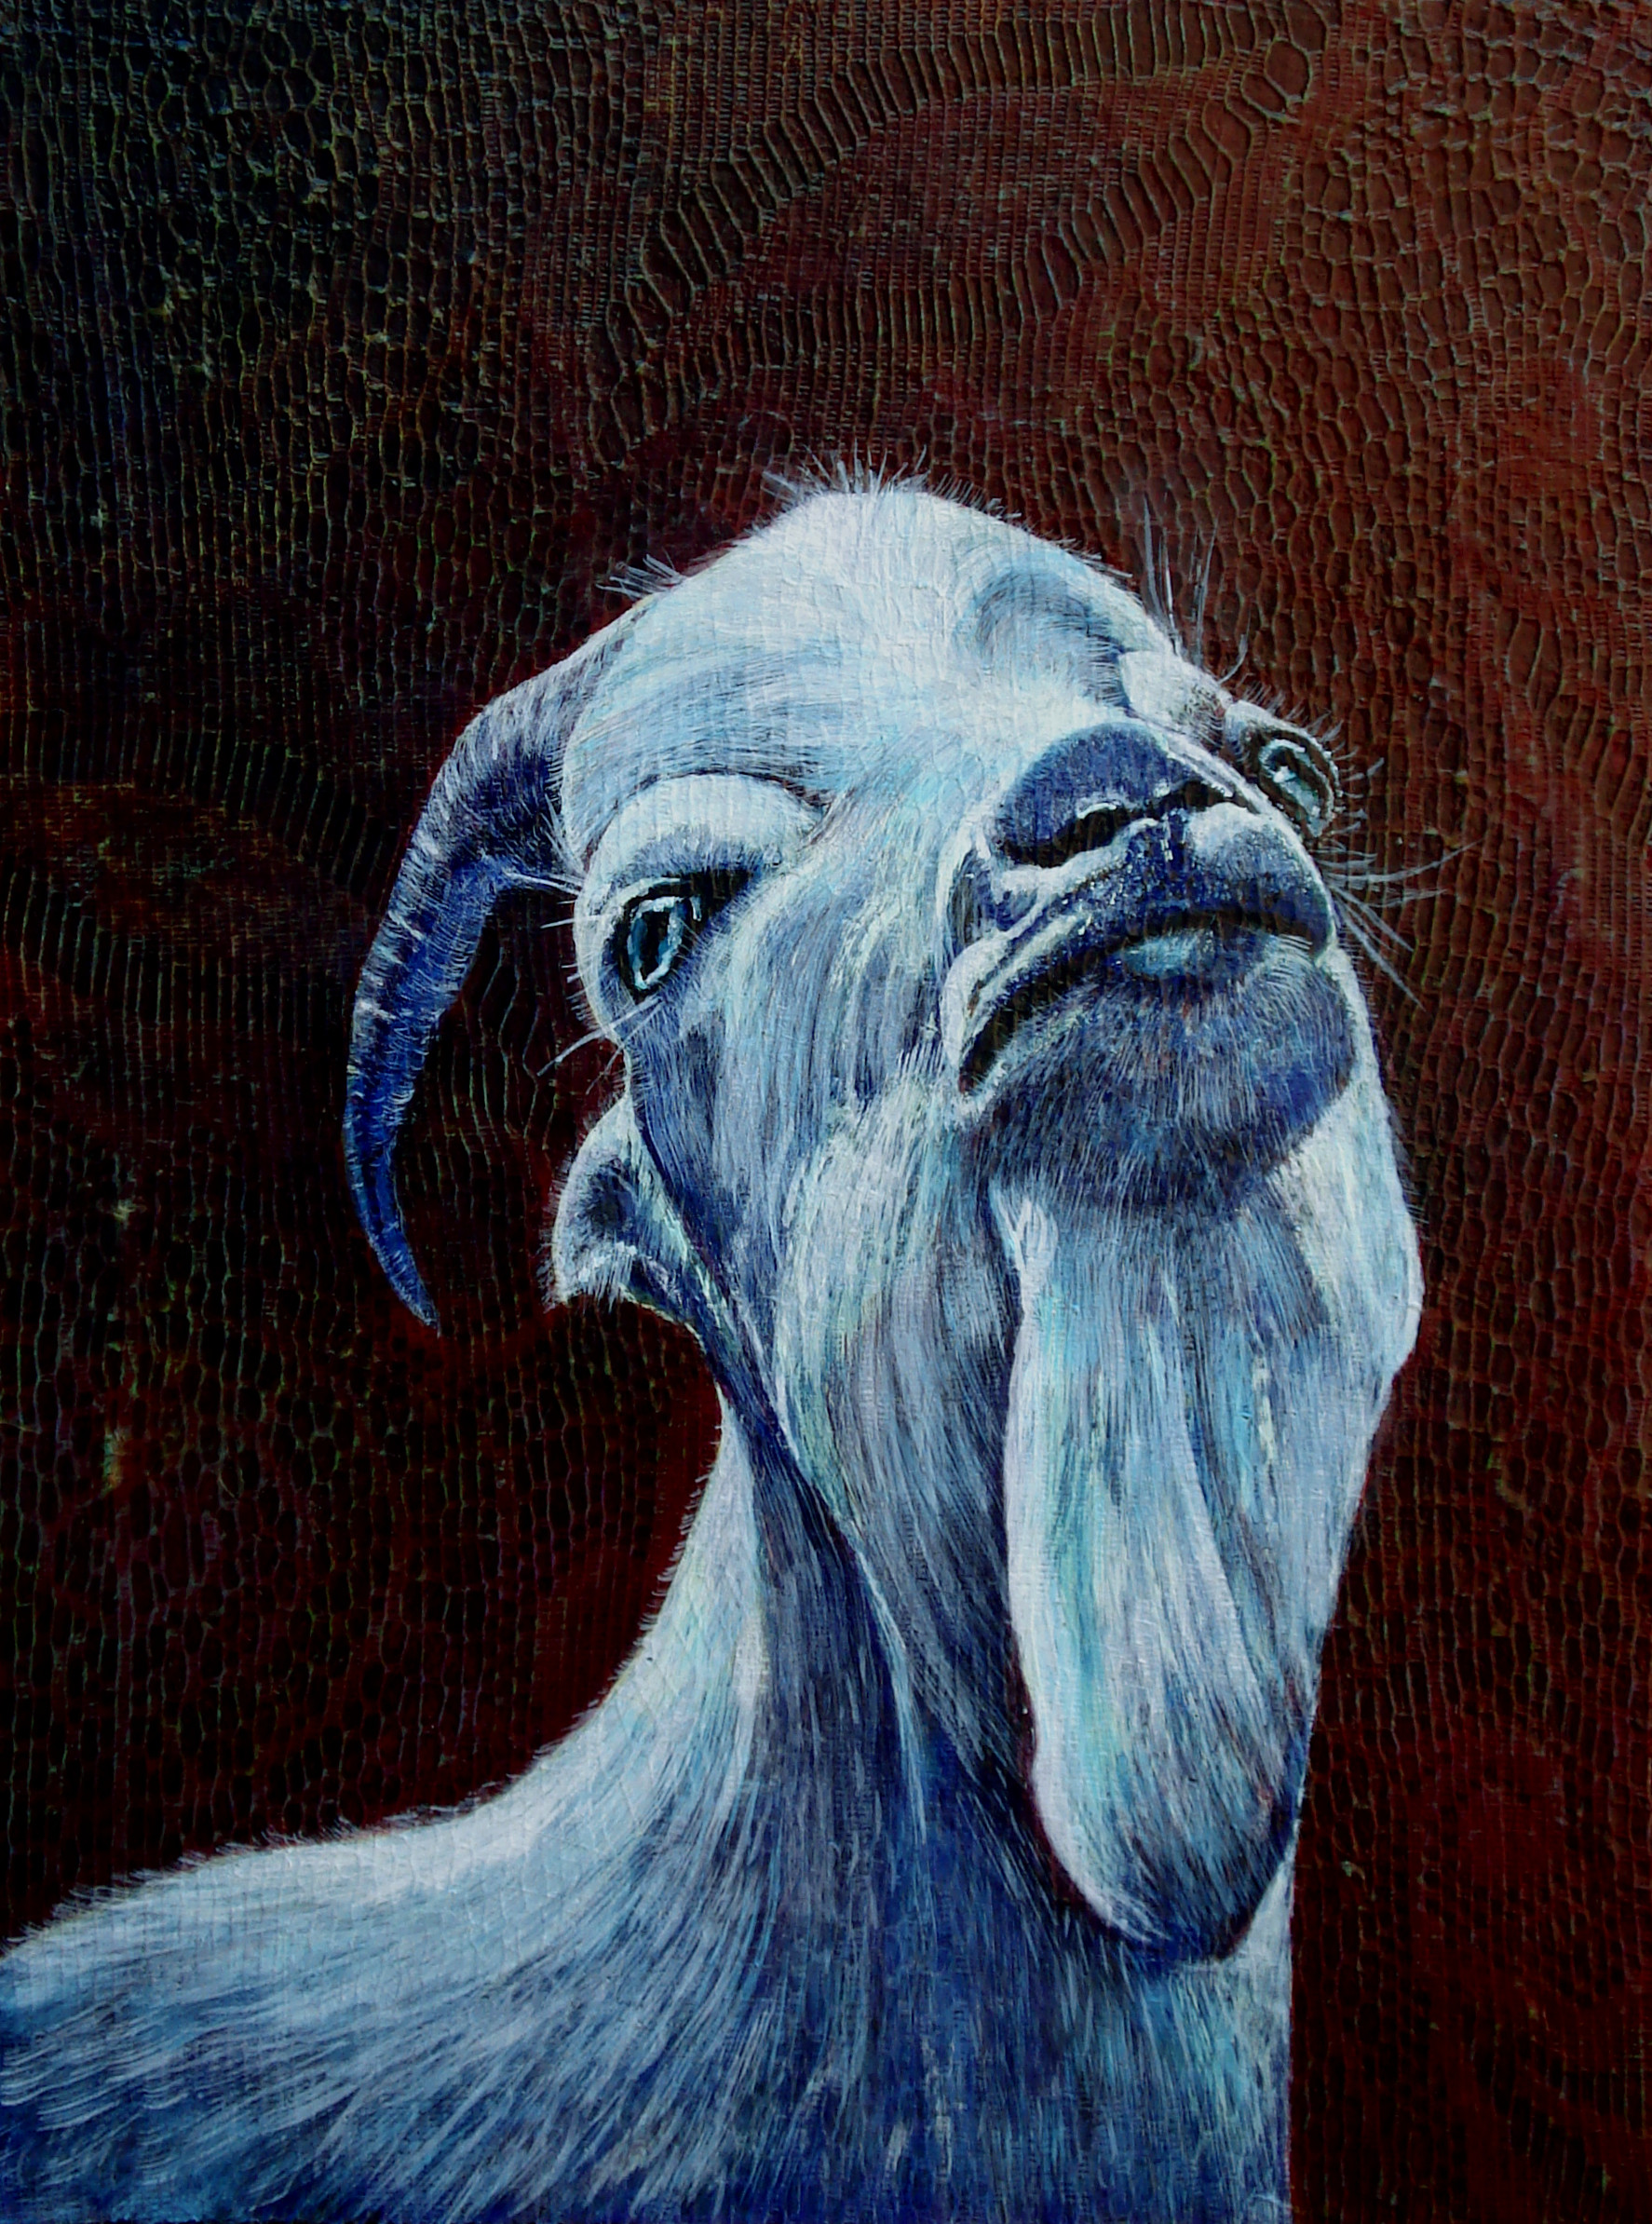 The proud goat